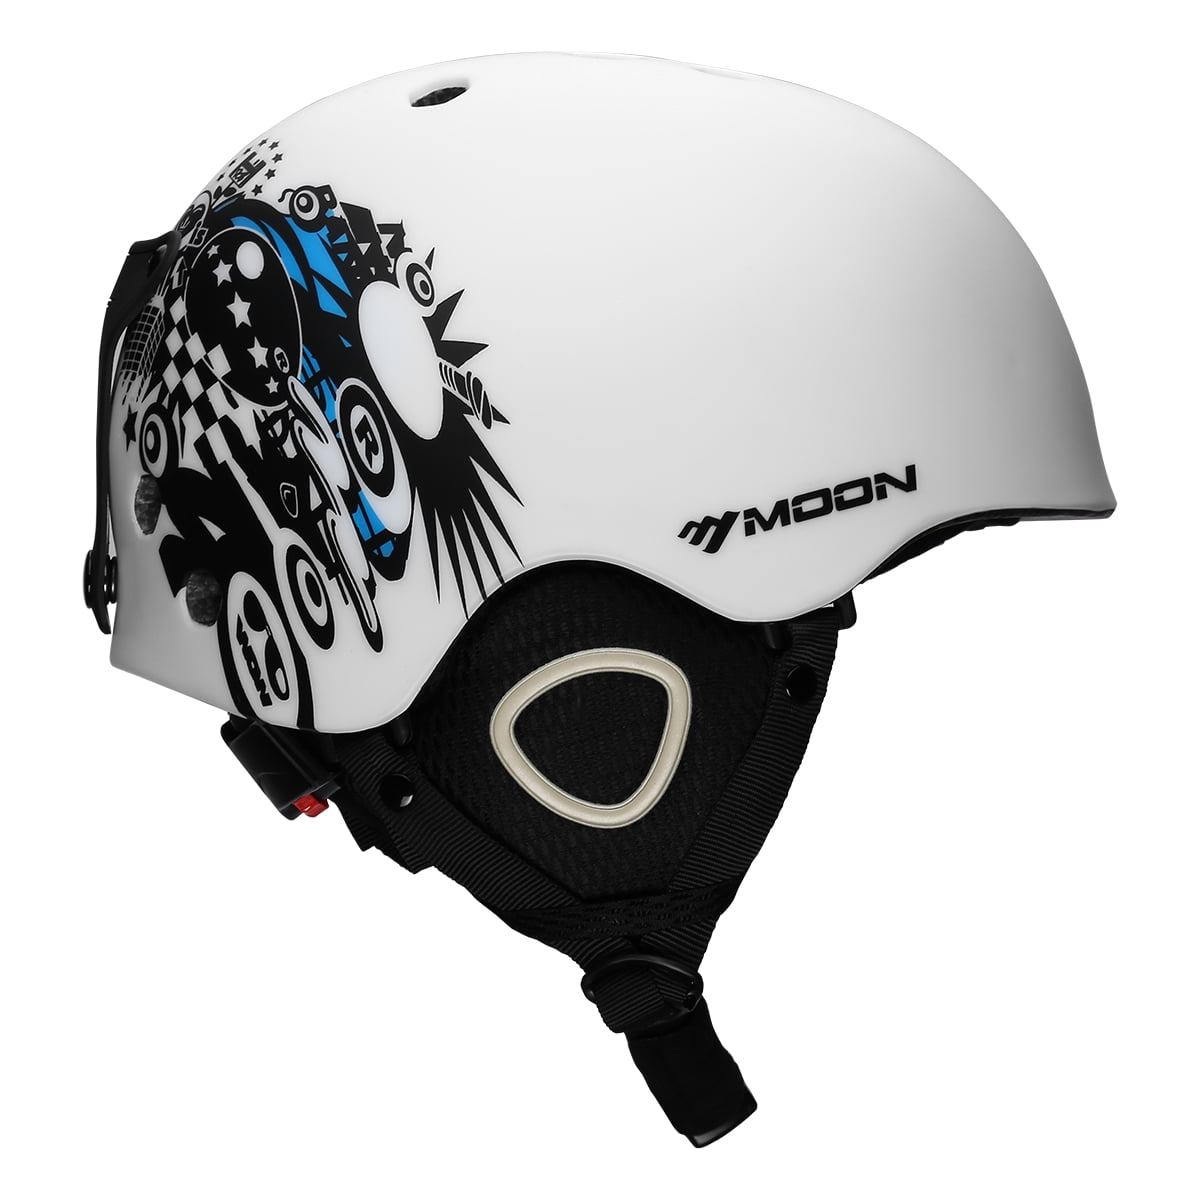 MOON Hot Sale Ski Helmet Integrally-molded Skiing Helmet For Adult and Kids Snow 